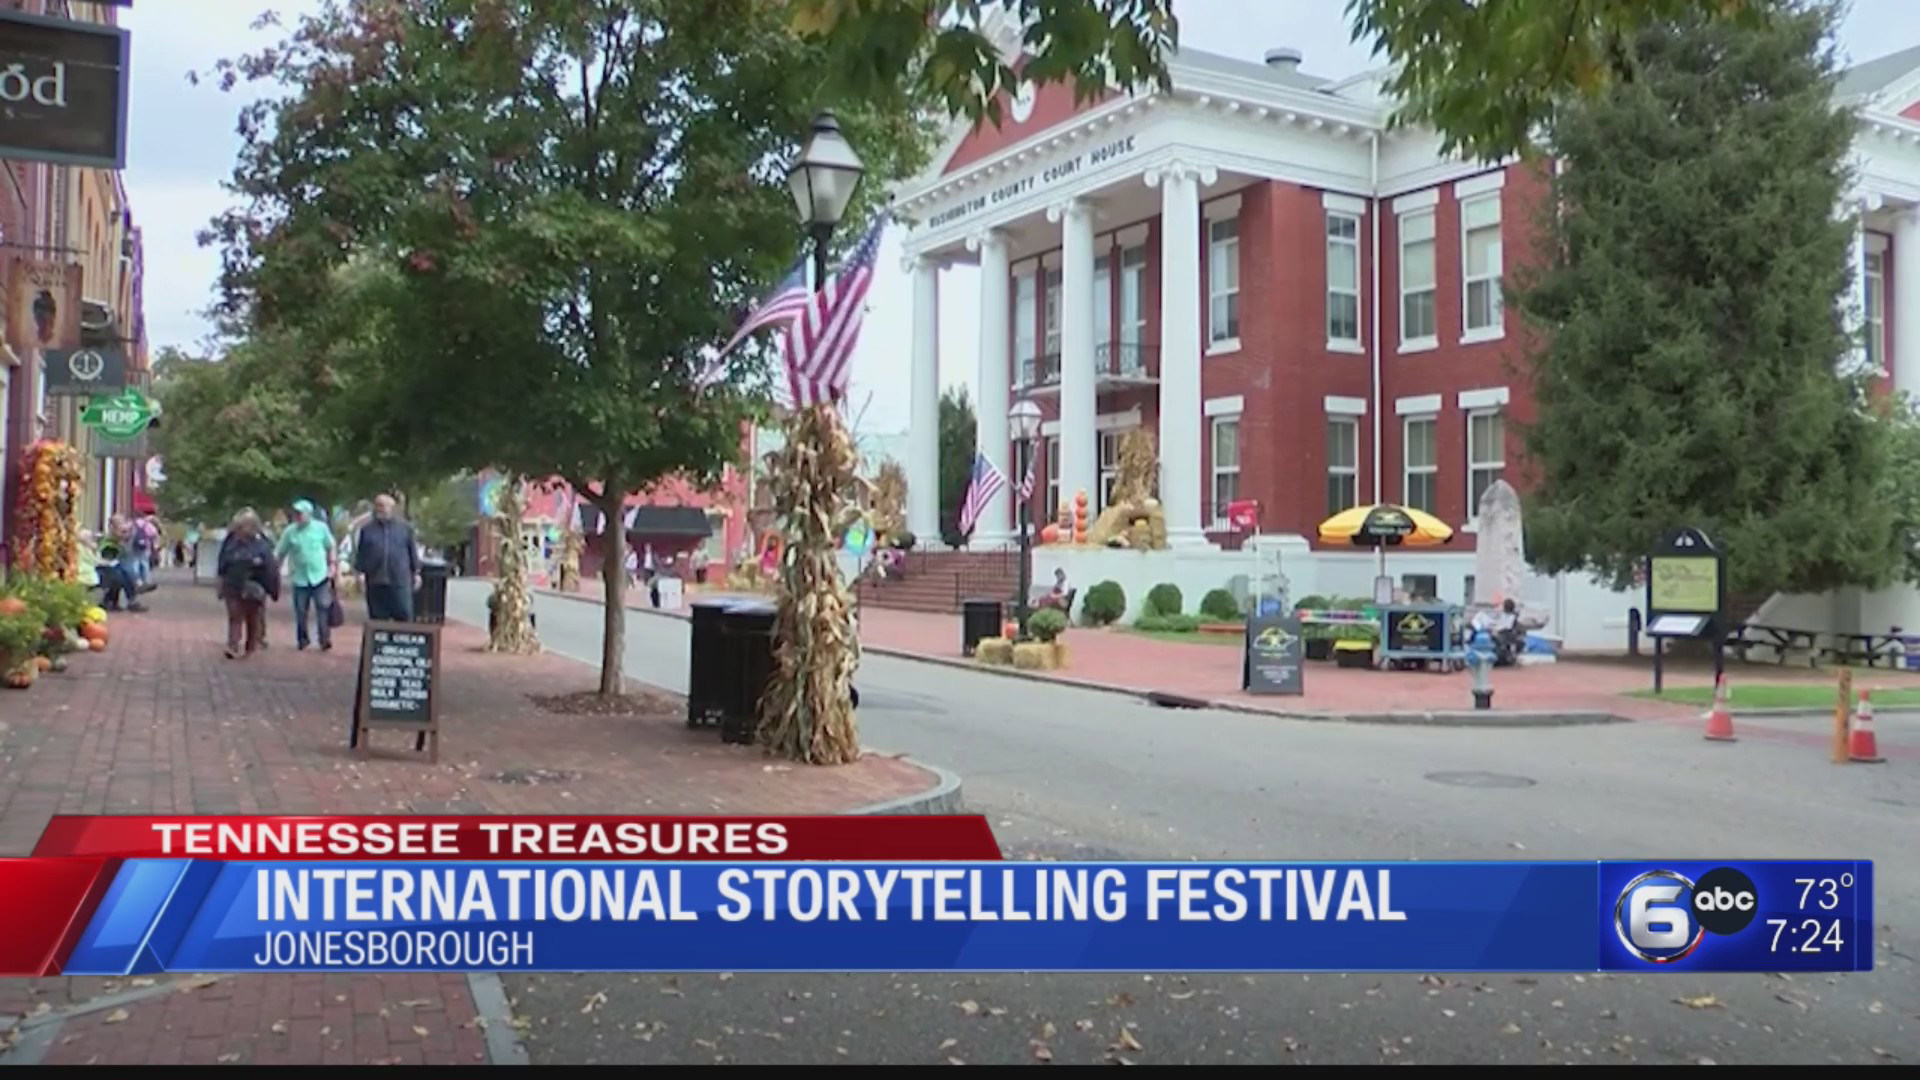 Tennessee Treasures Jonesborough's International Storytelling Festival